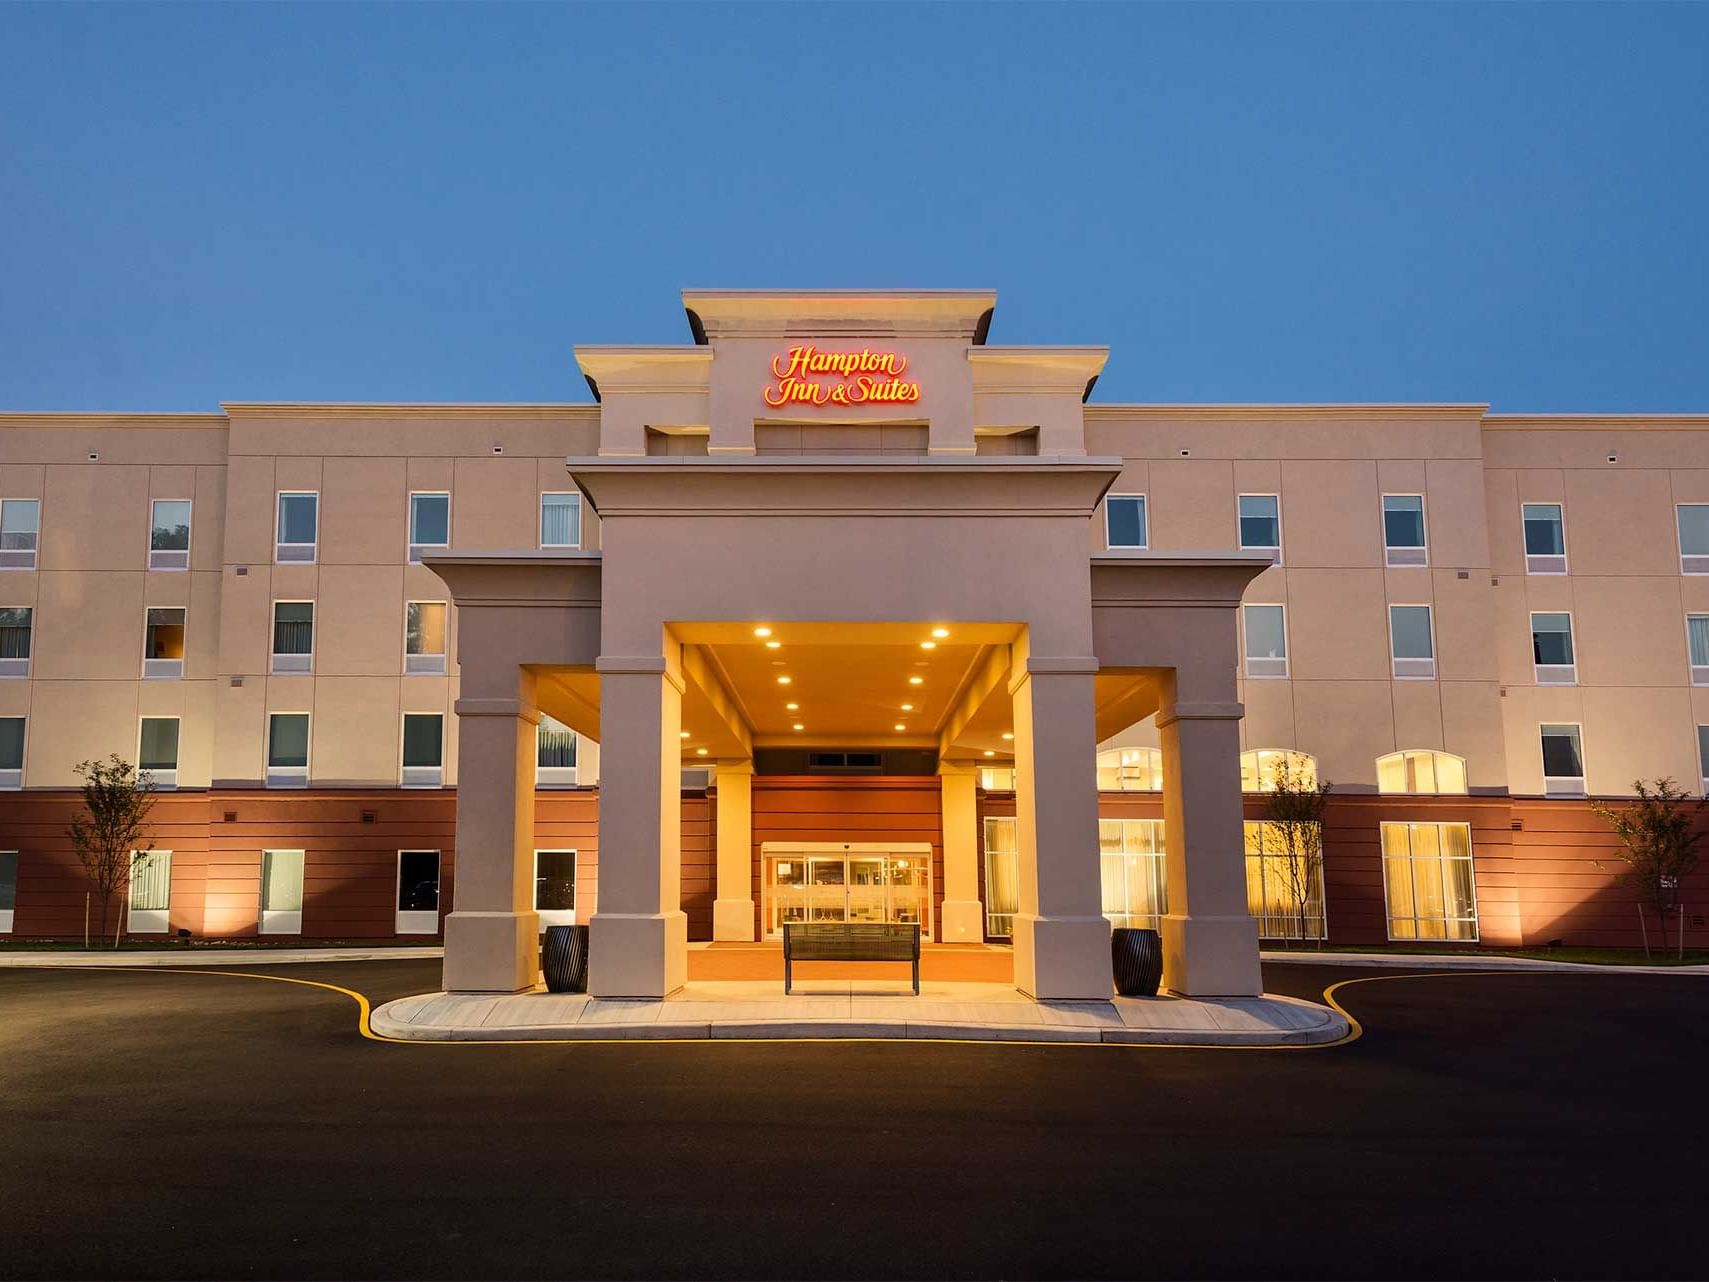 TBC Hotels Hampton Inn and Suites Wilmington Christiana Newark